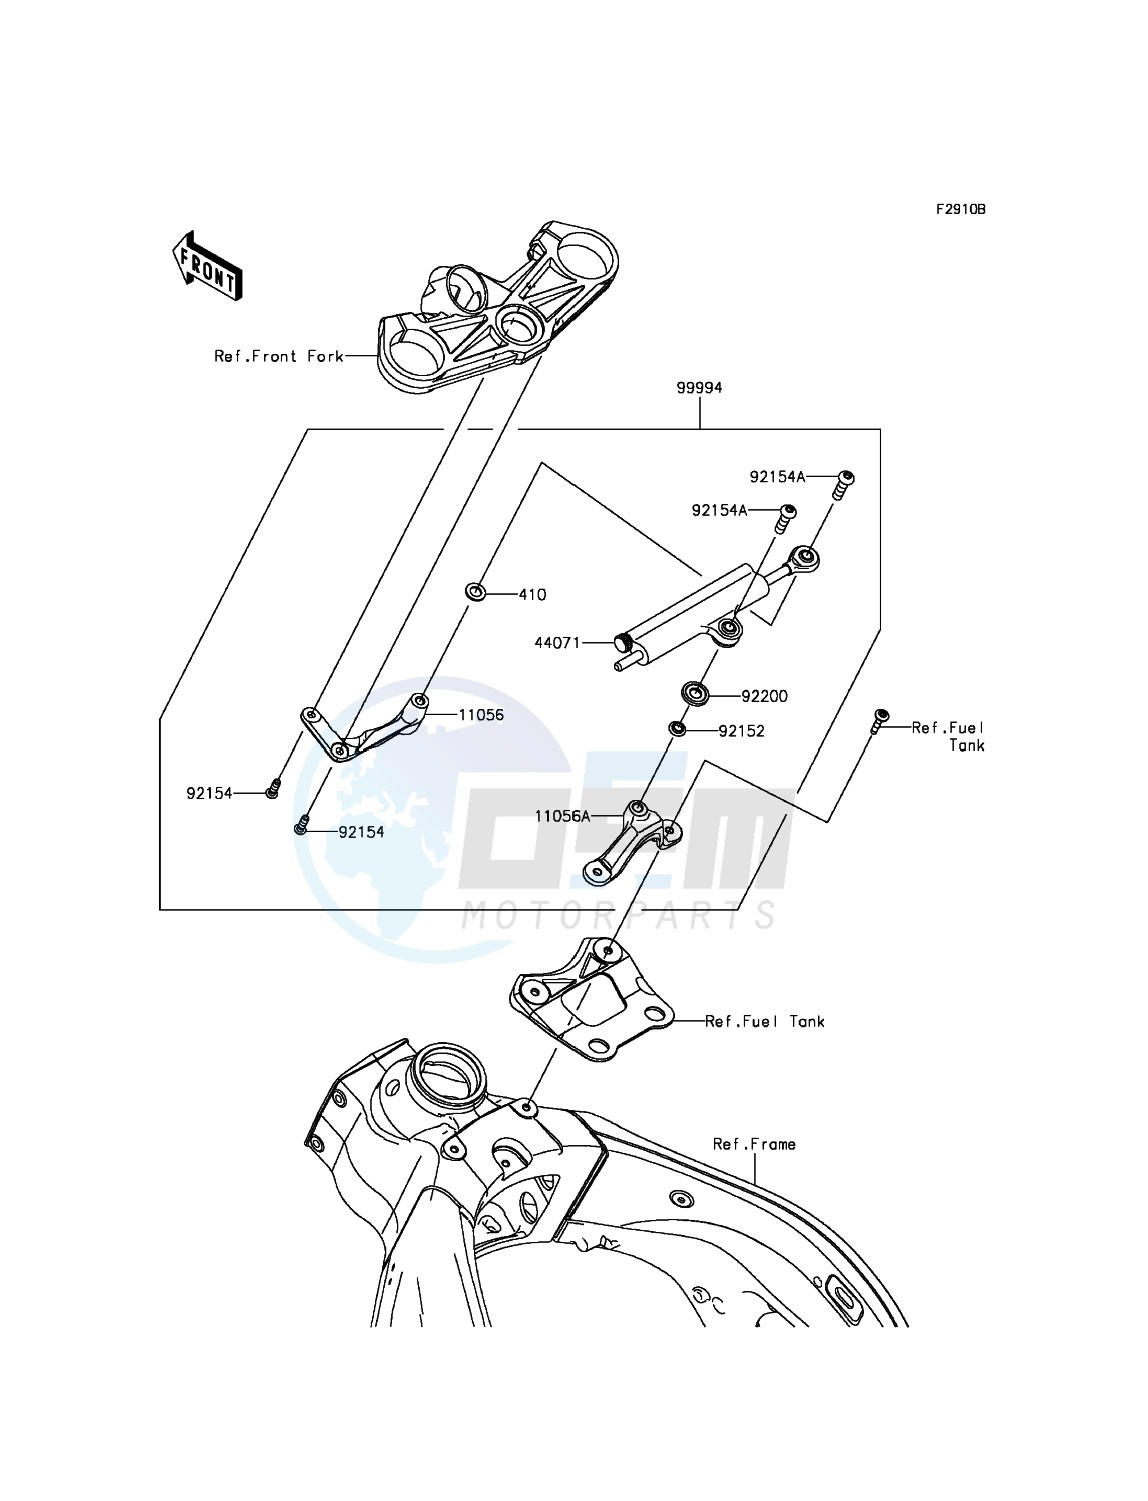 Accessory(Steering Damper) blueprint